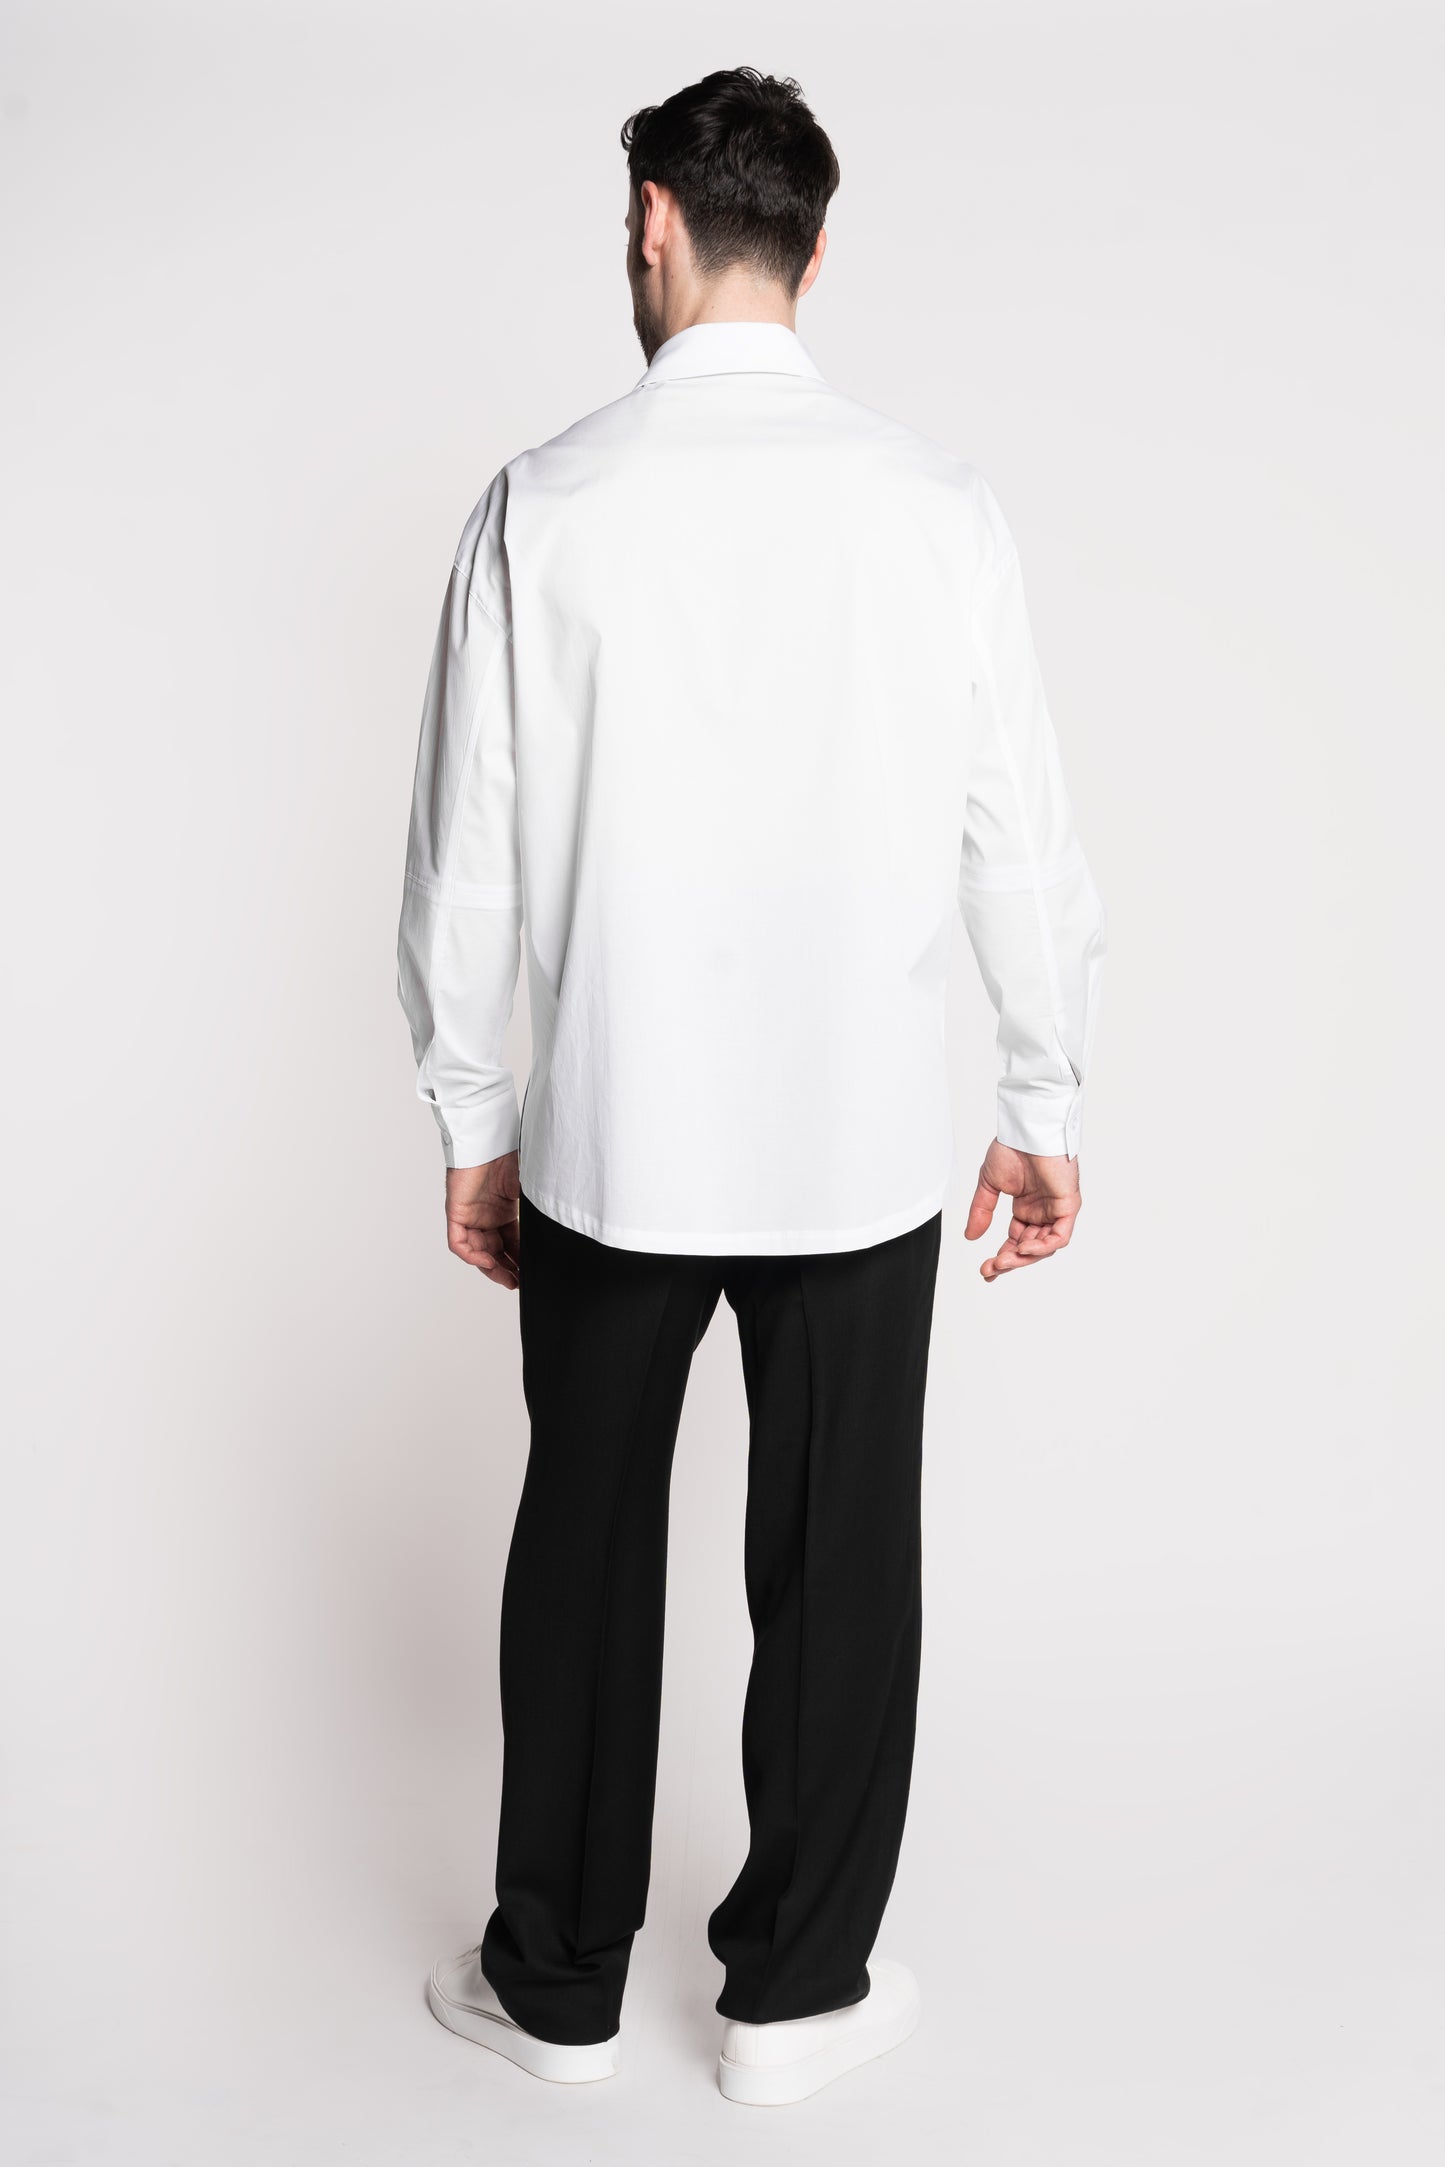 Men's White Shirt | Casual White Shirt | Erverte Paris